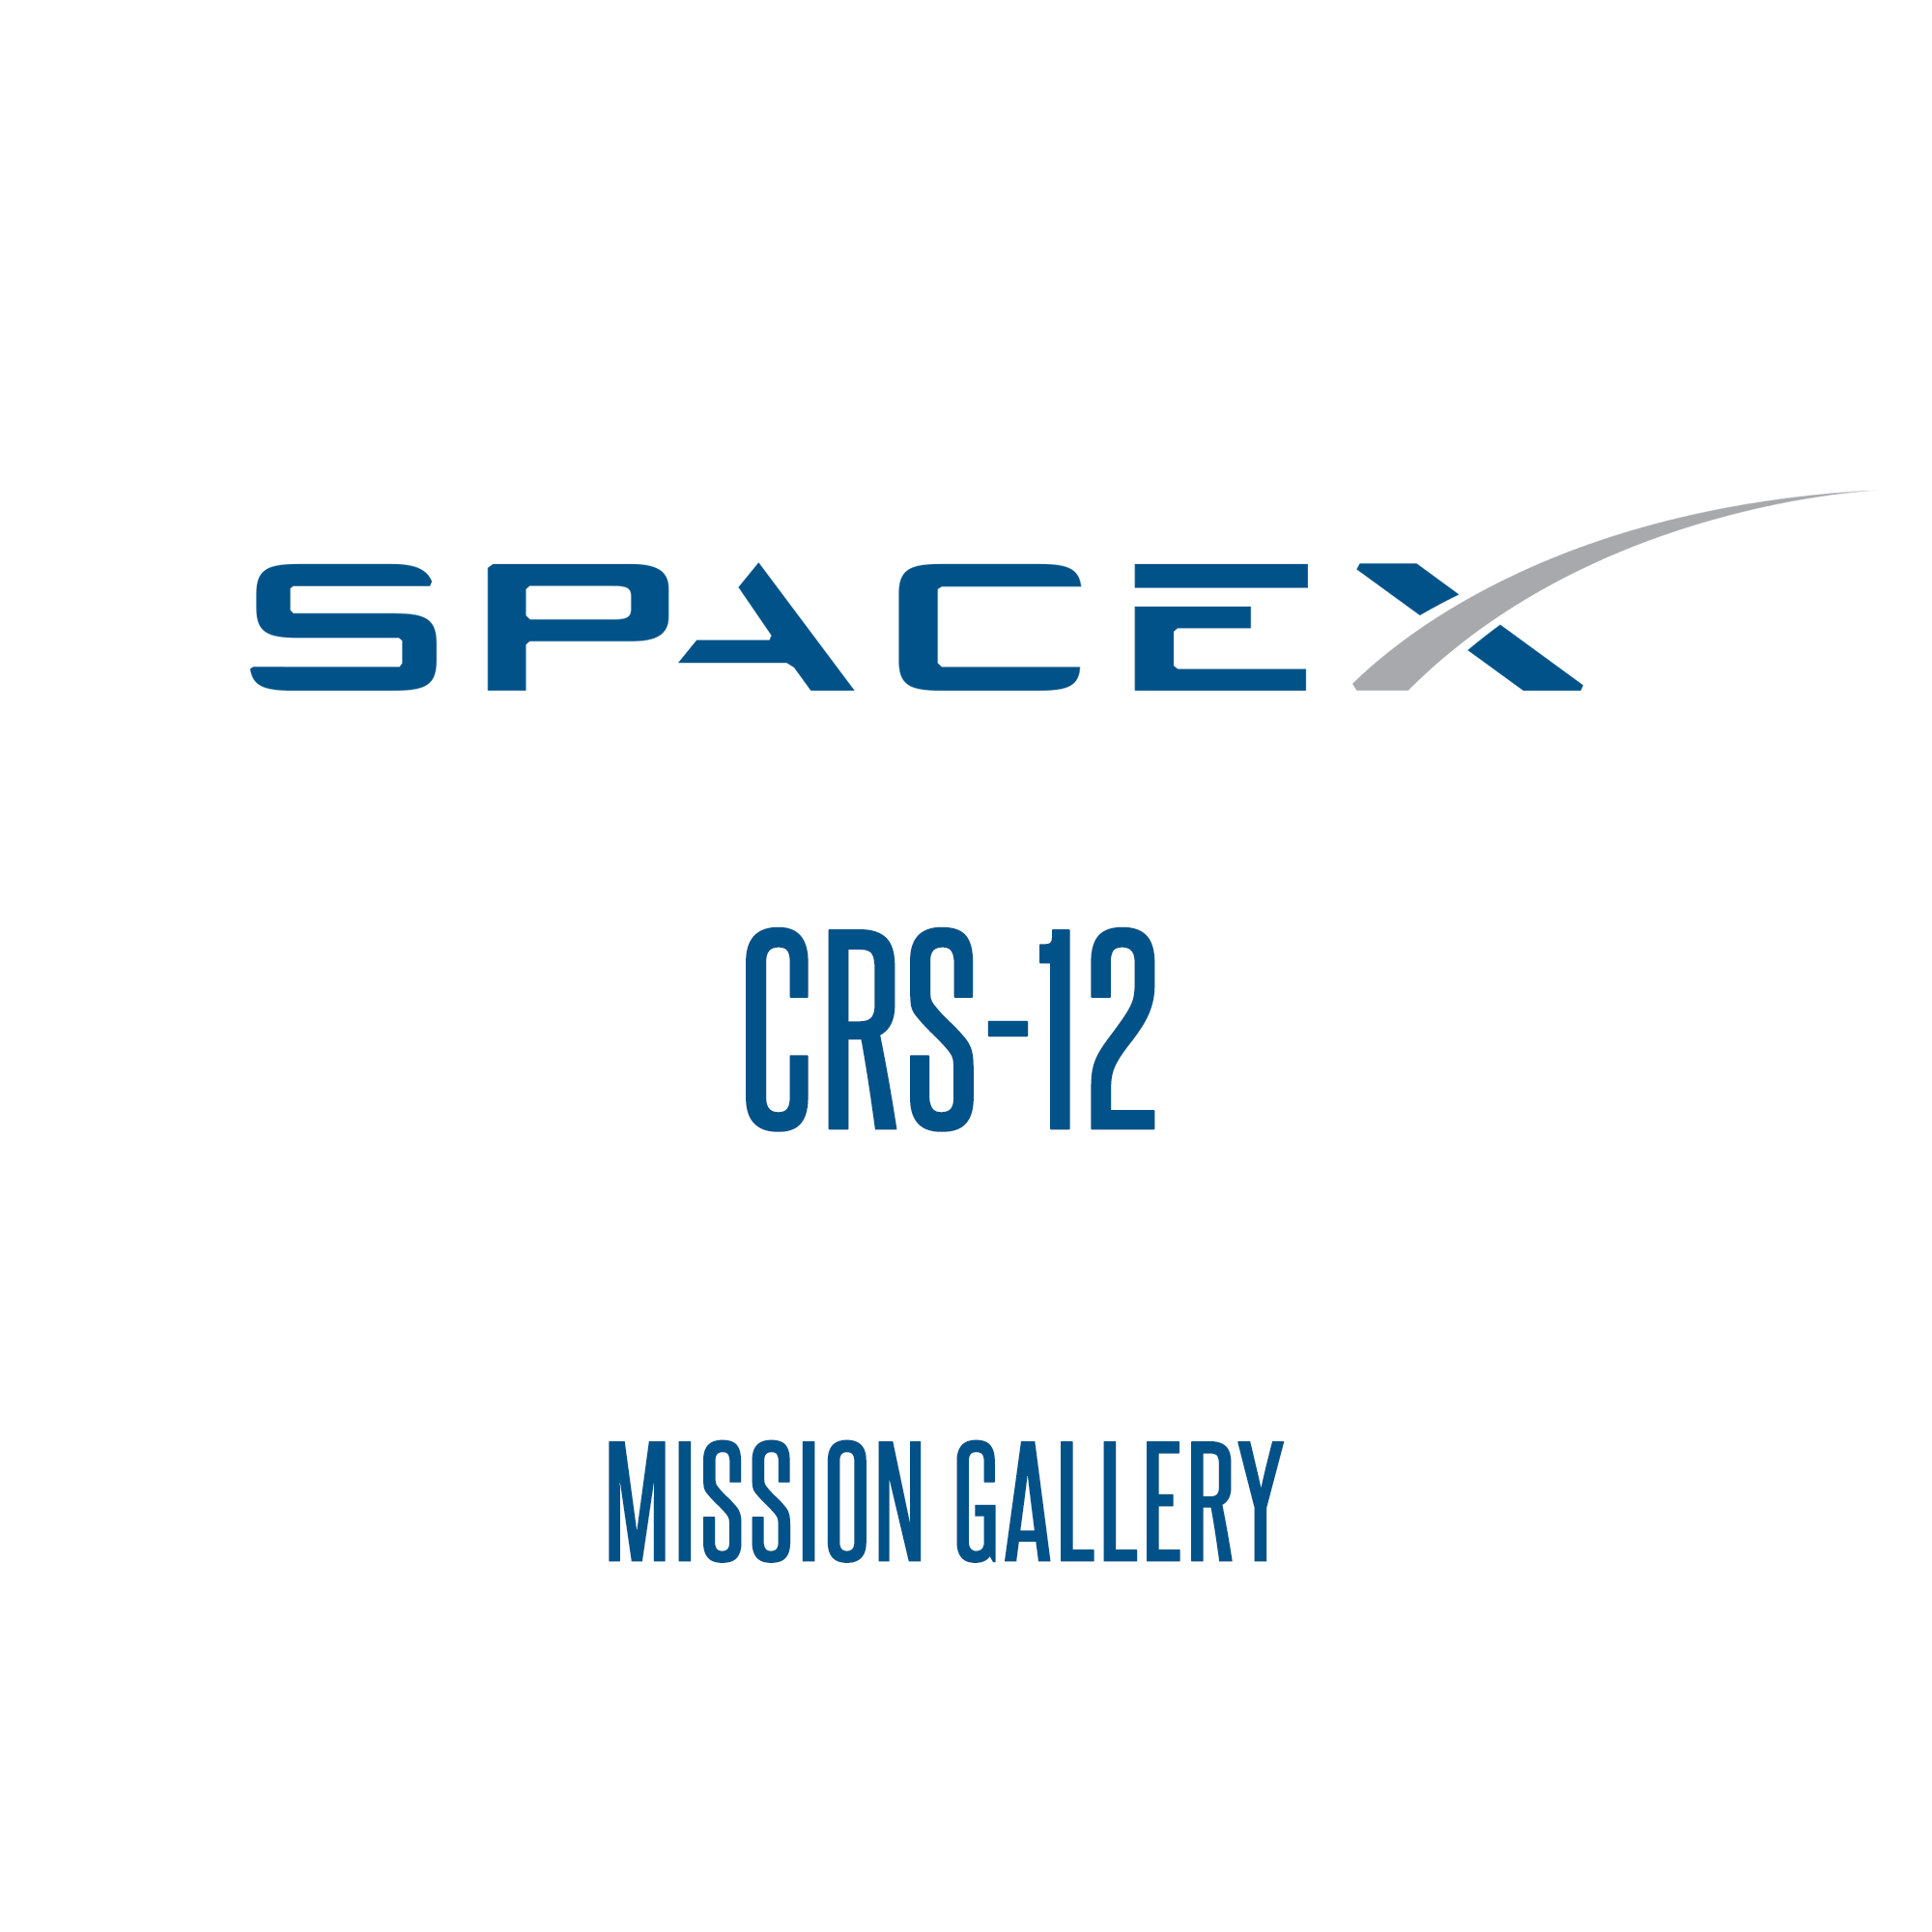 Sapce-X Logo - SpaceX Logo.svg News 360